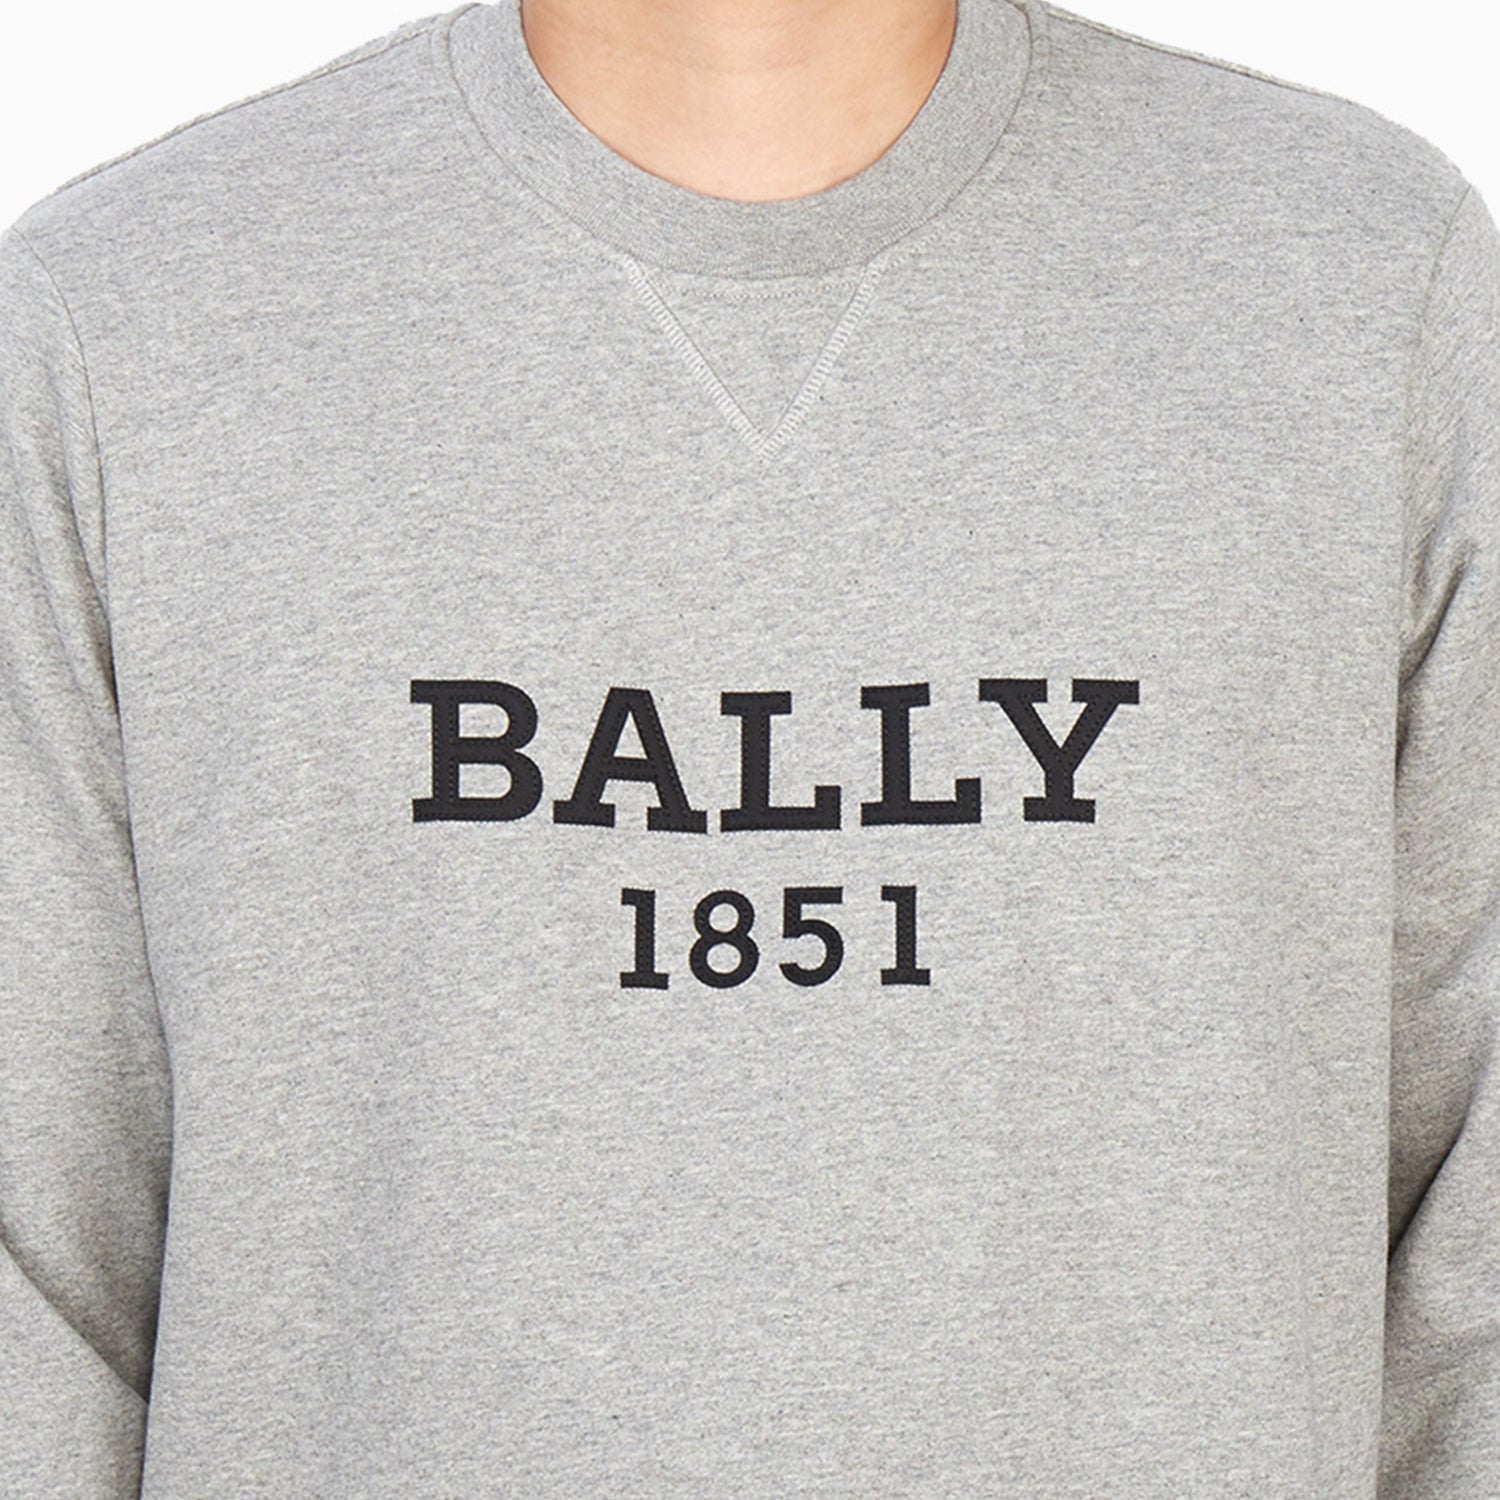 bally-mens-sweatshirt-crew-neck-m5ba751f-7s348-227